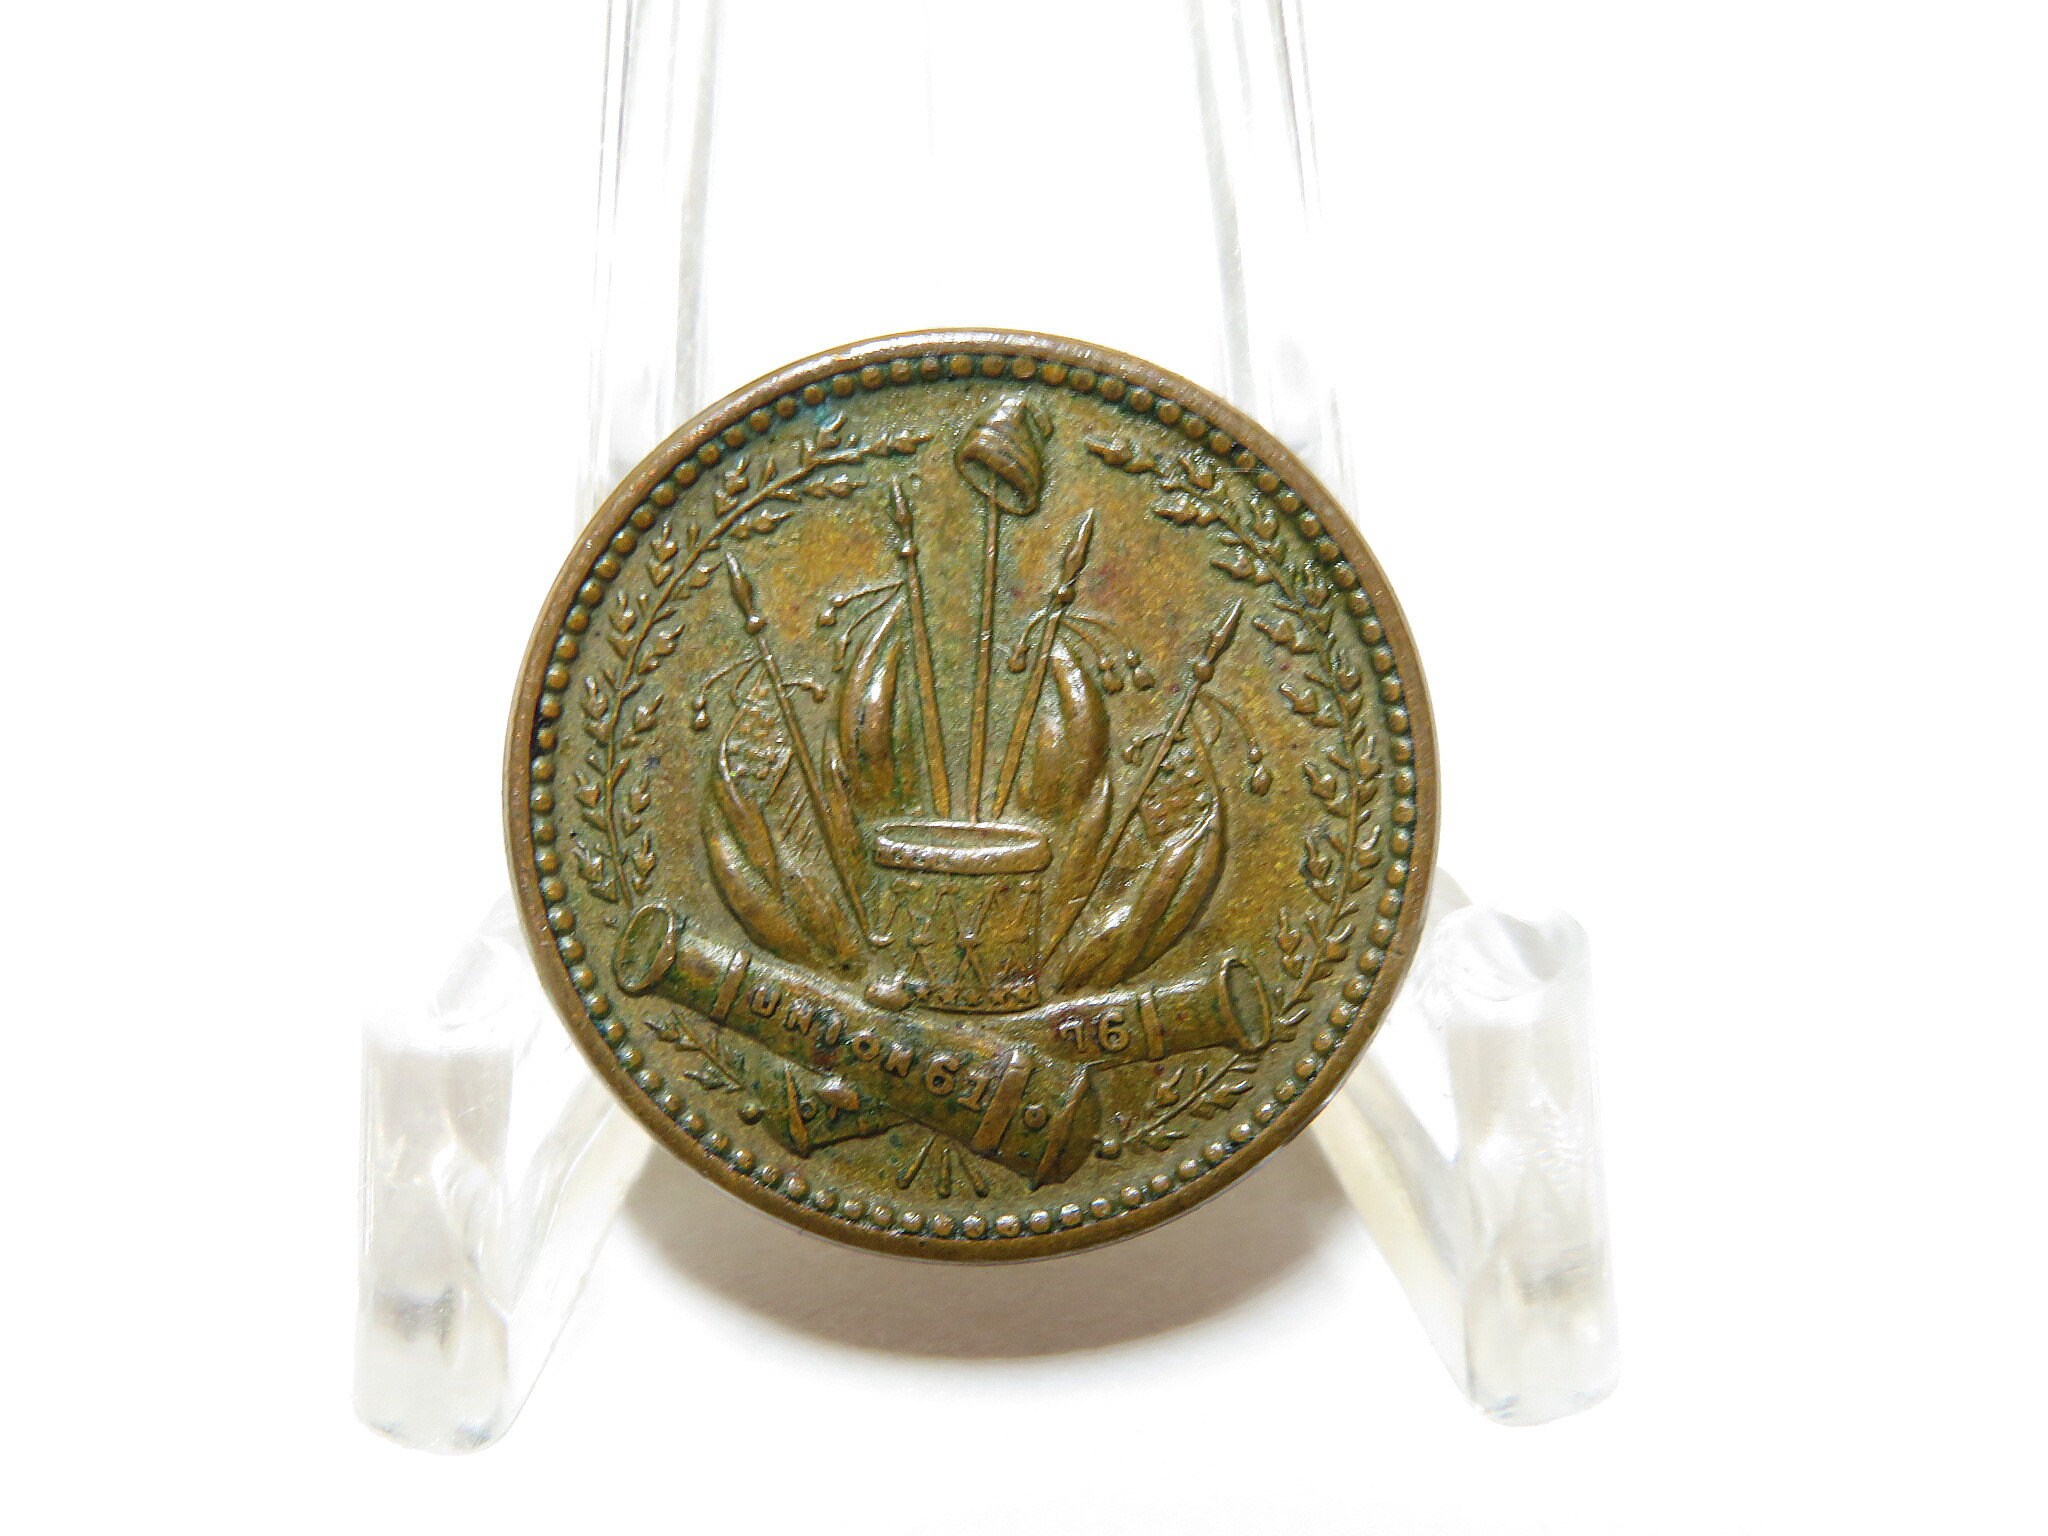 1863 Civil War Token I.O.U 1 Cent - Free Shipping USA - The Happy Coin